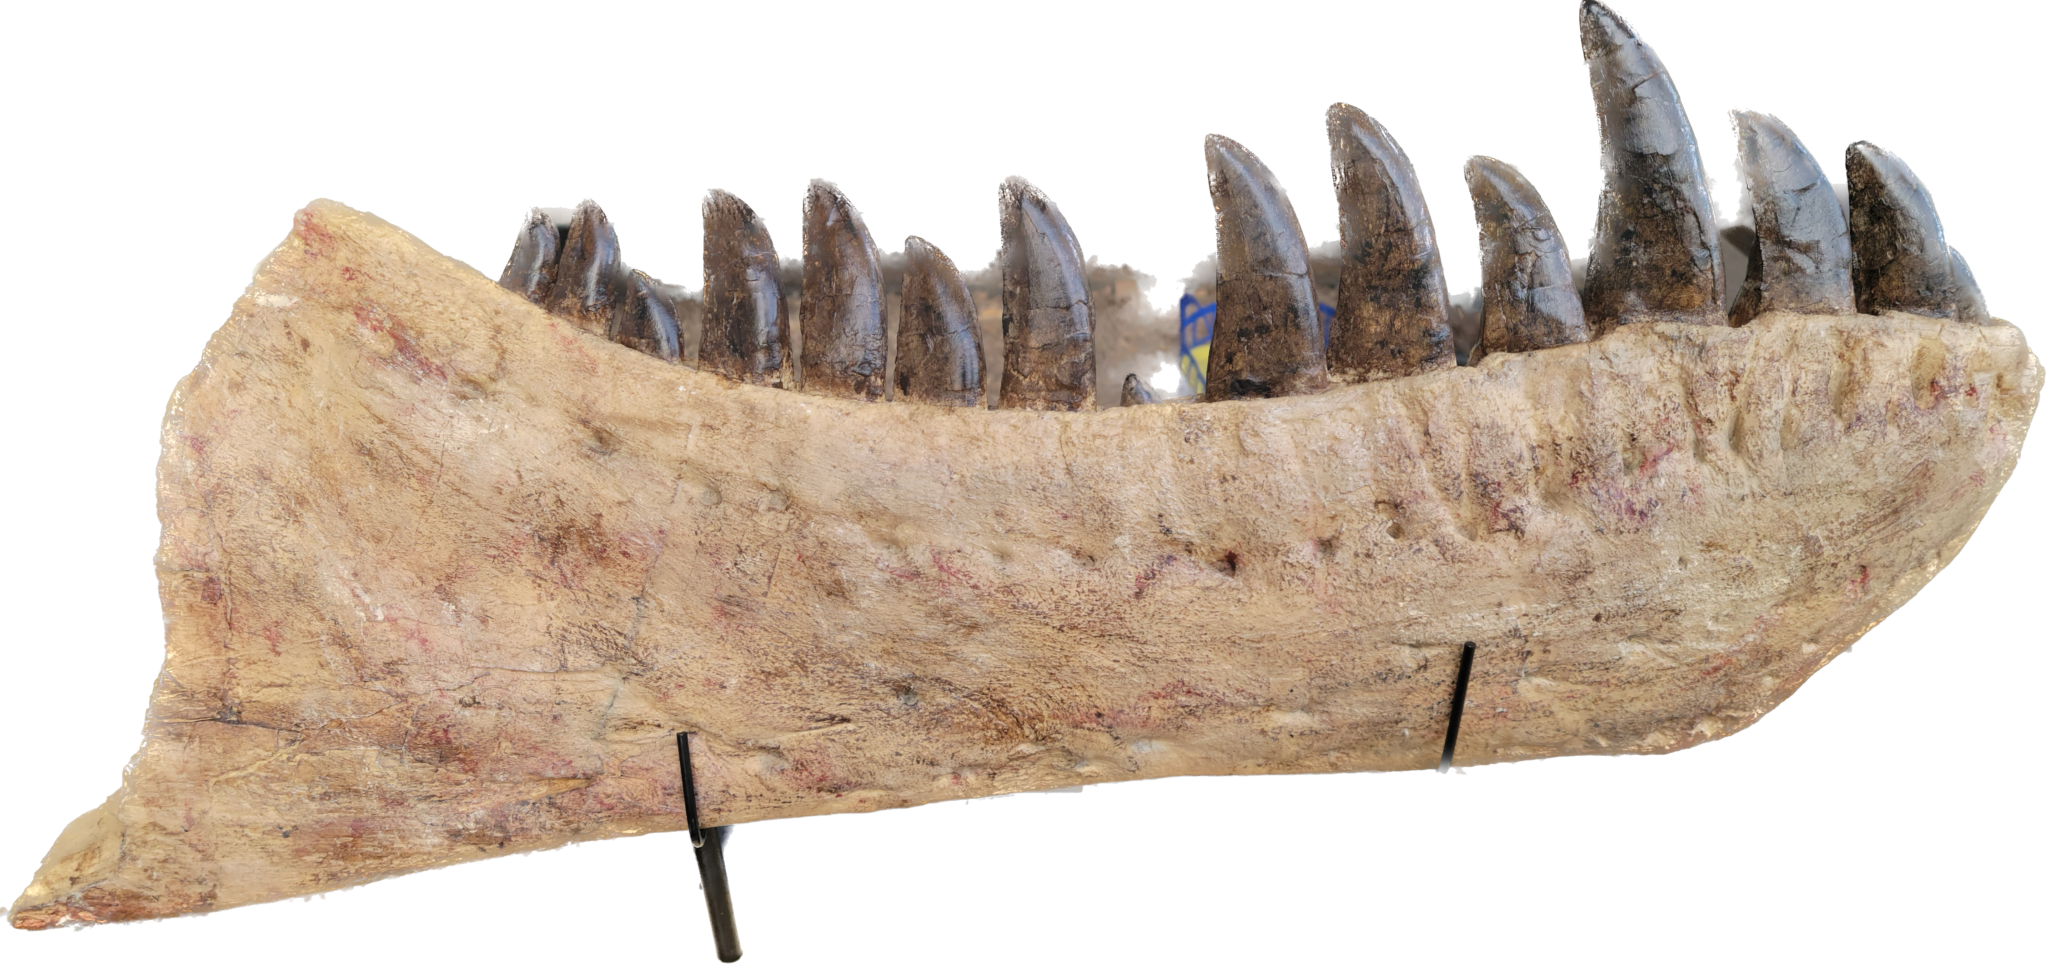 Tarbosaurus Bataar replica jaw, One of a kind Prehistoric Online